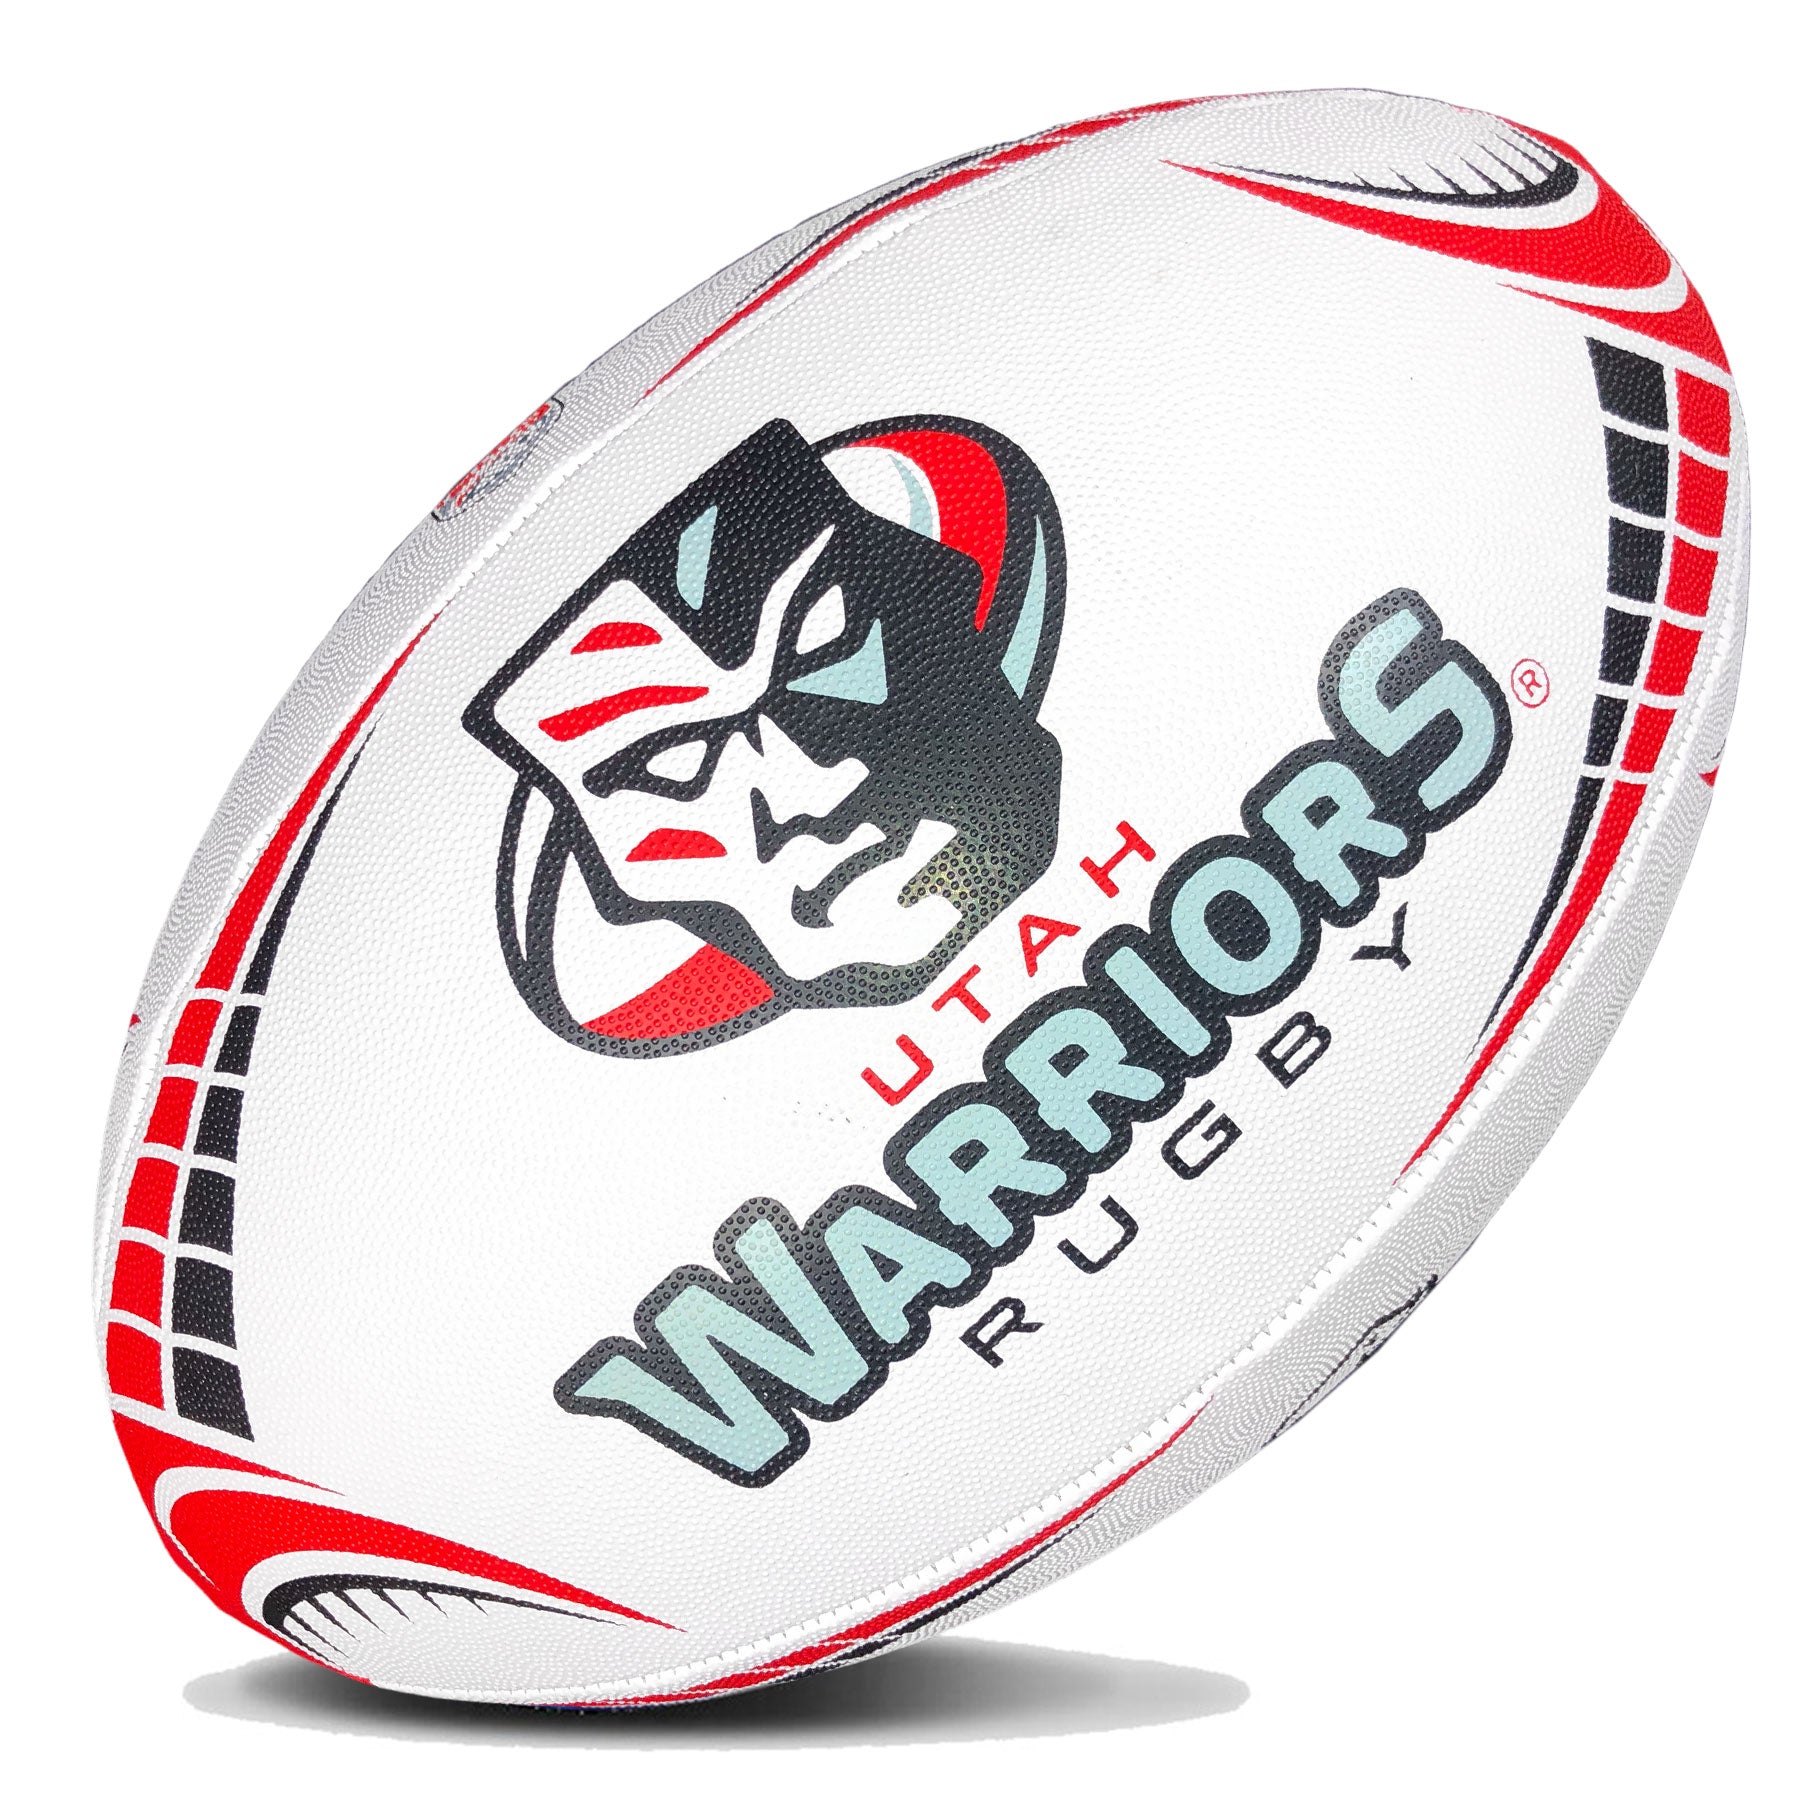 NEW WARRIORS KITS ARE HERE - Utah Warriors Rugby